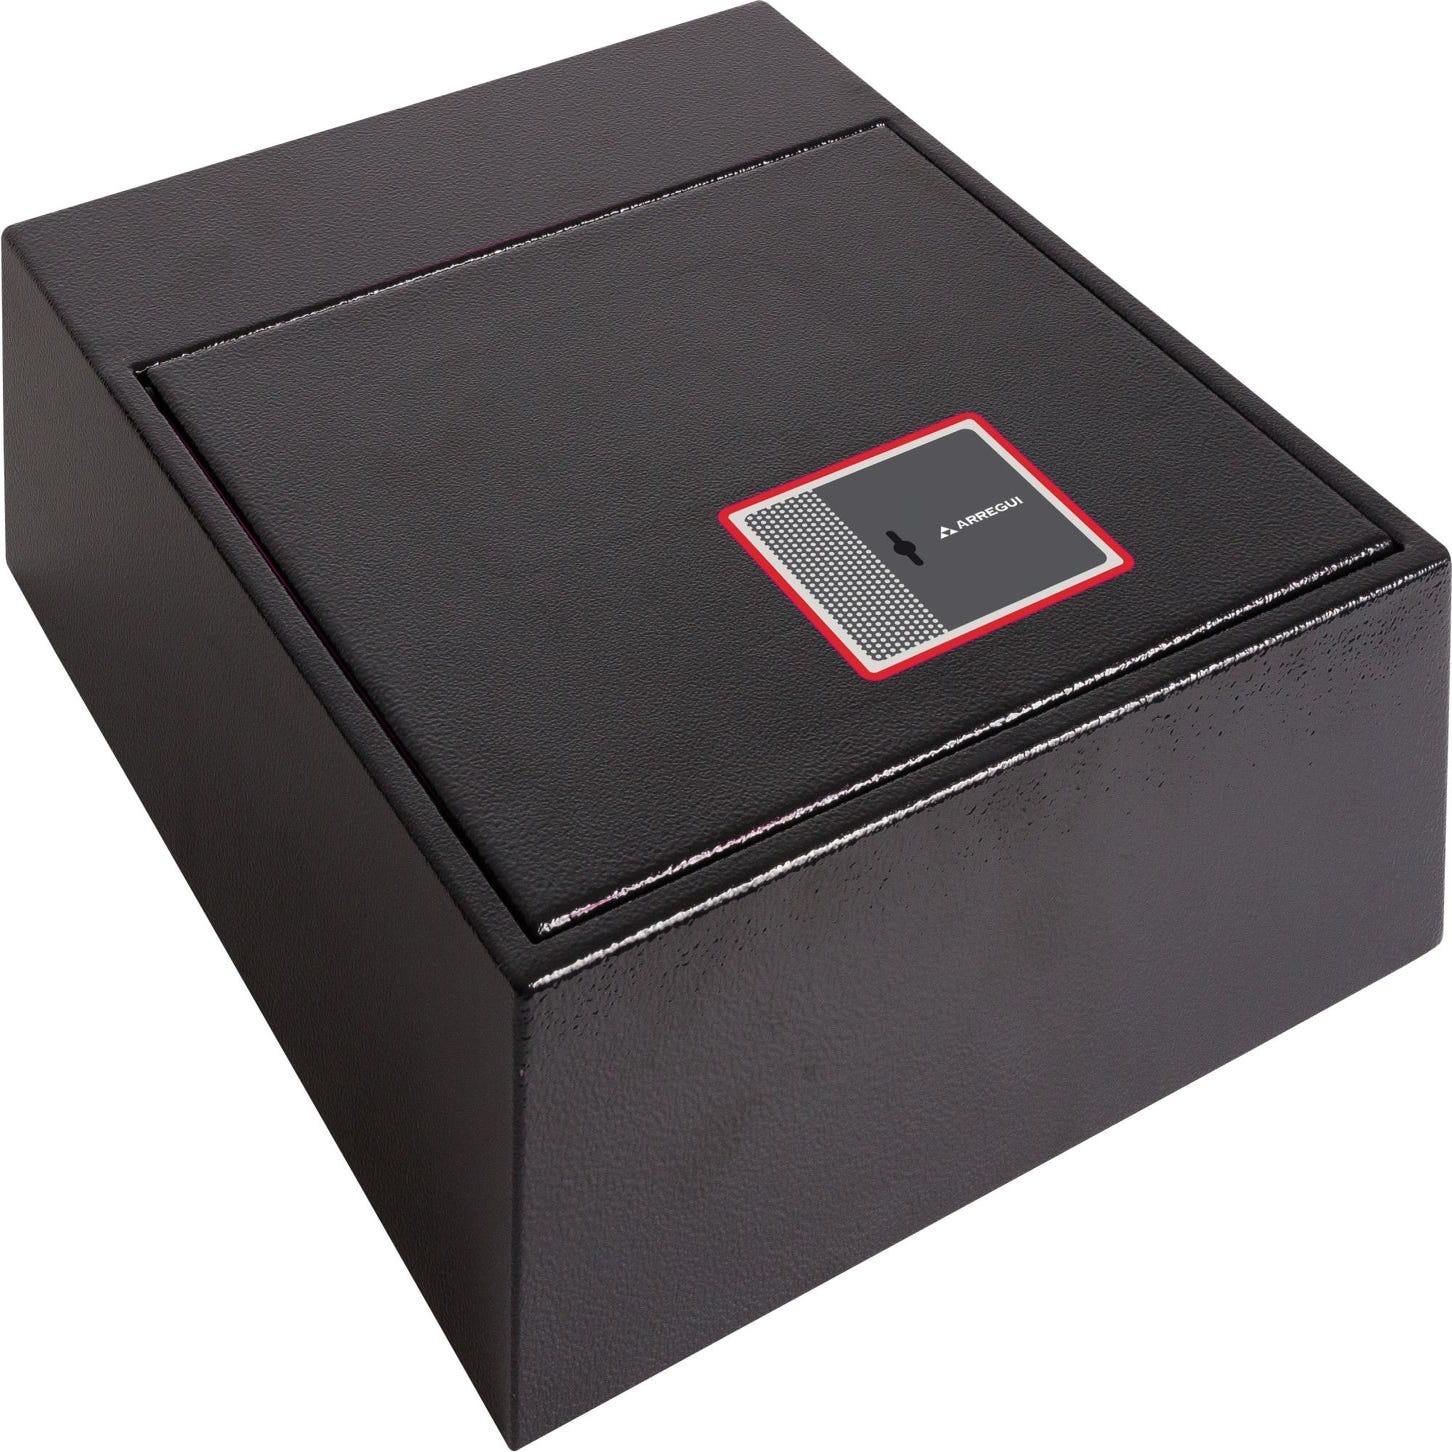 ARREGUI Box In 22100-S1 Caja fuerte para camuflar tras zócalo de cocina, Caja  fuerte empotrable, Caja de seguridad camuflada, 14,8x41x45 cm, 19 L